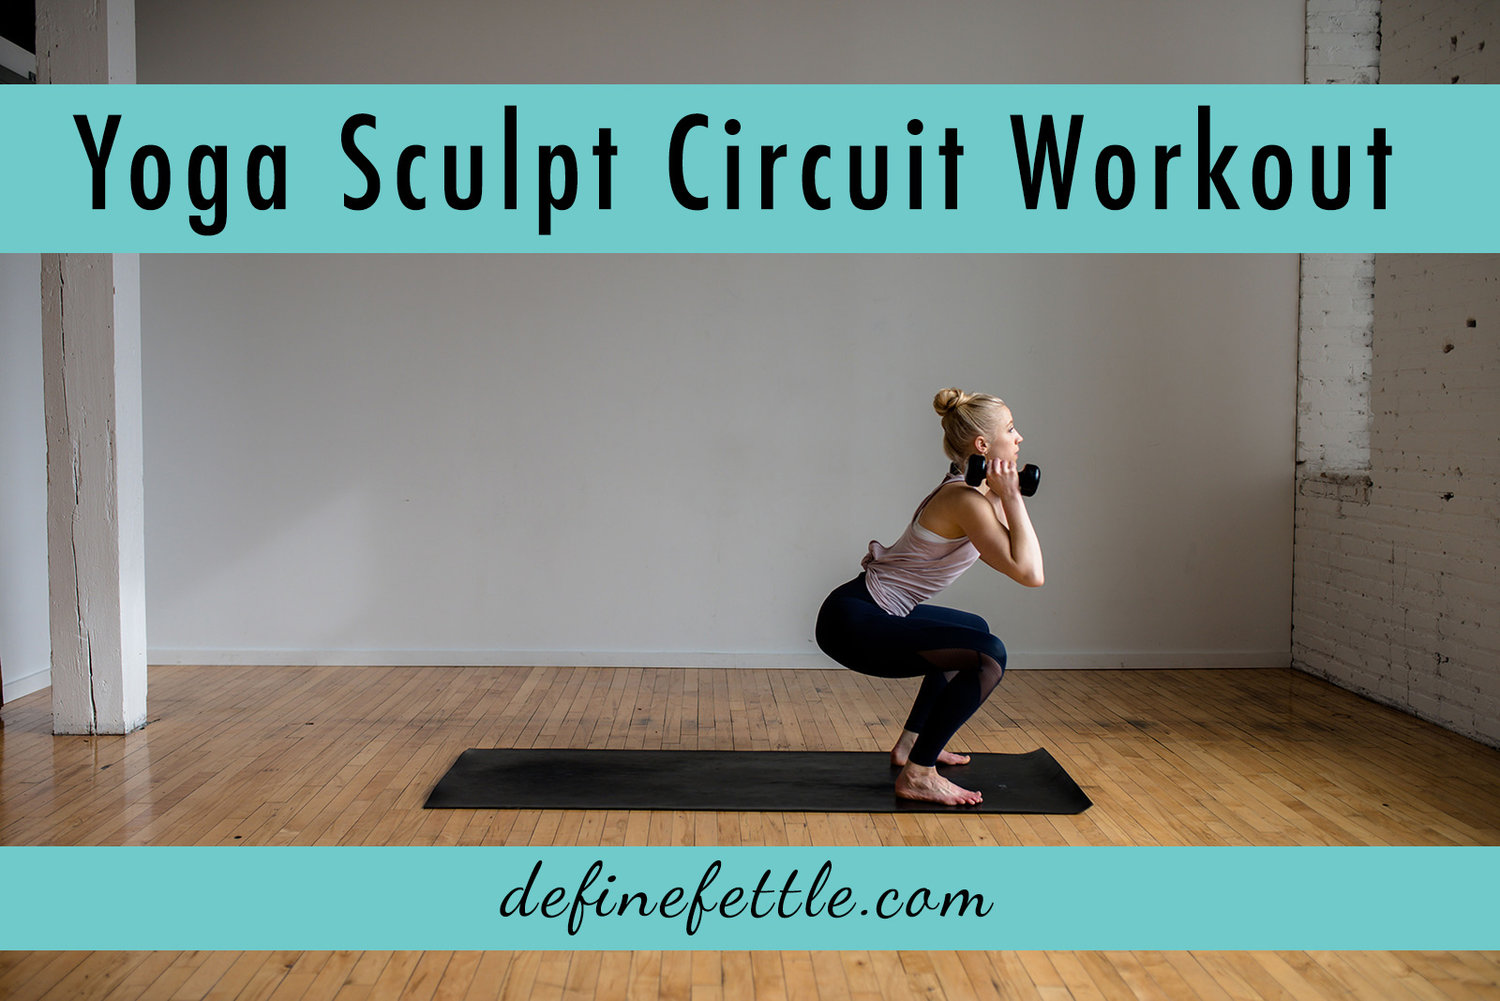 5 Yoga Sculpt Exercises You Can Do at Home